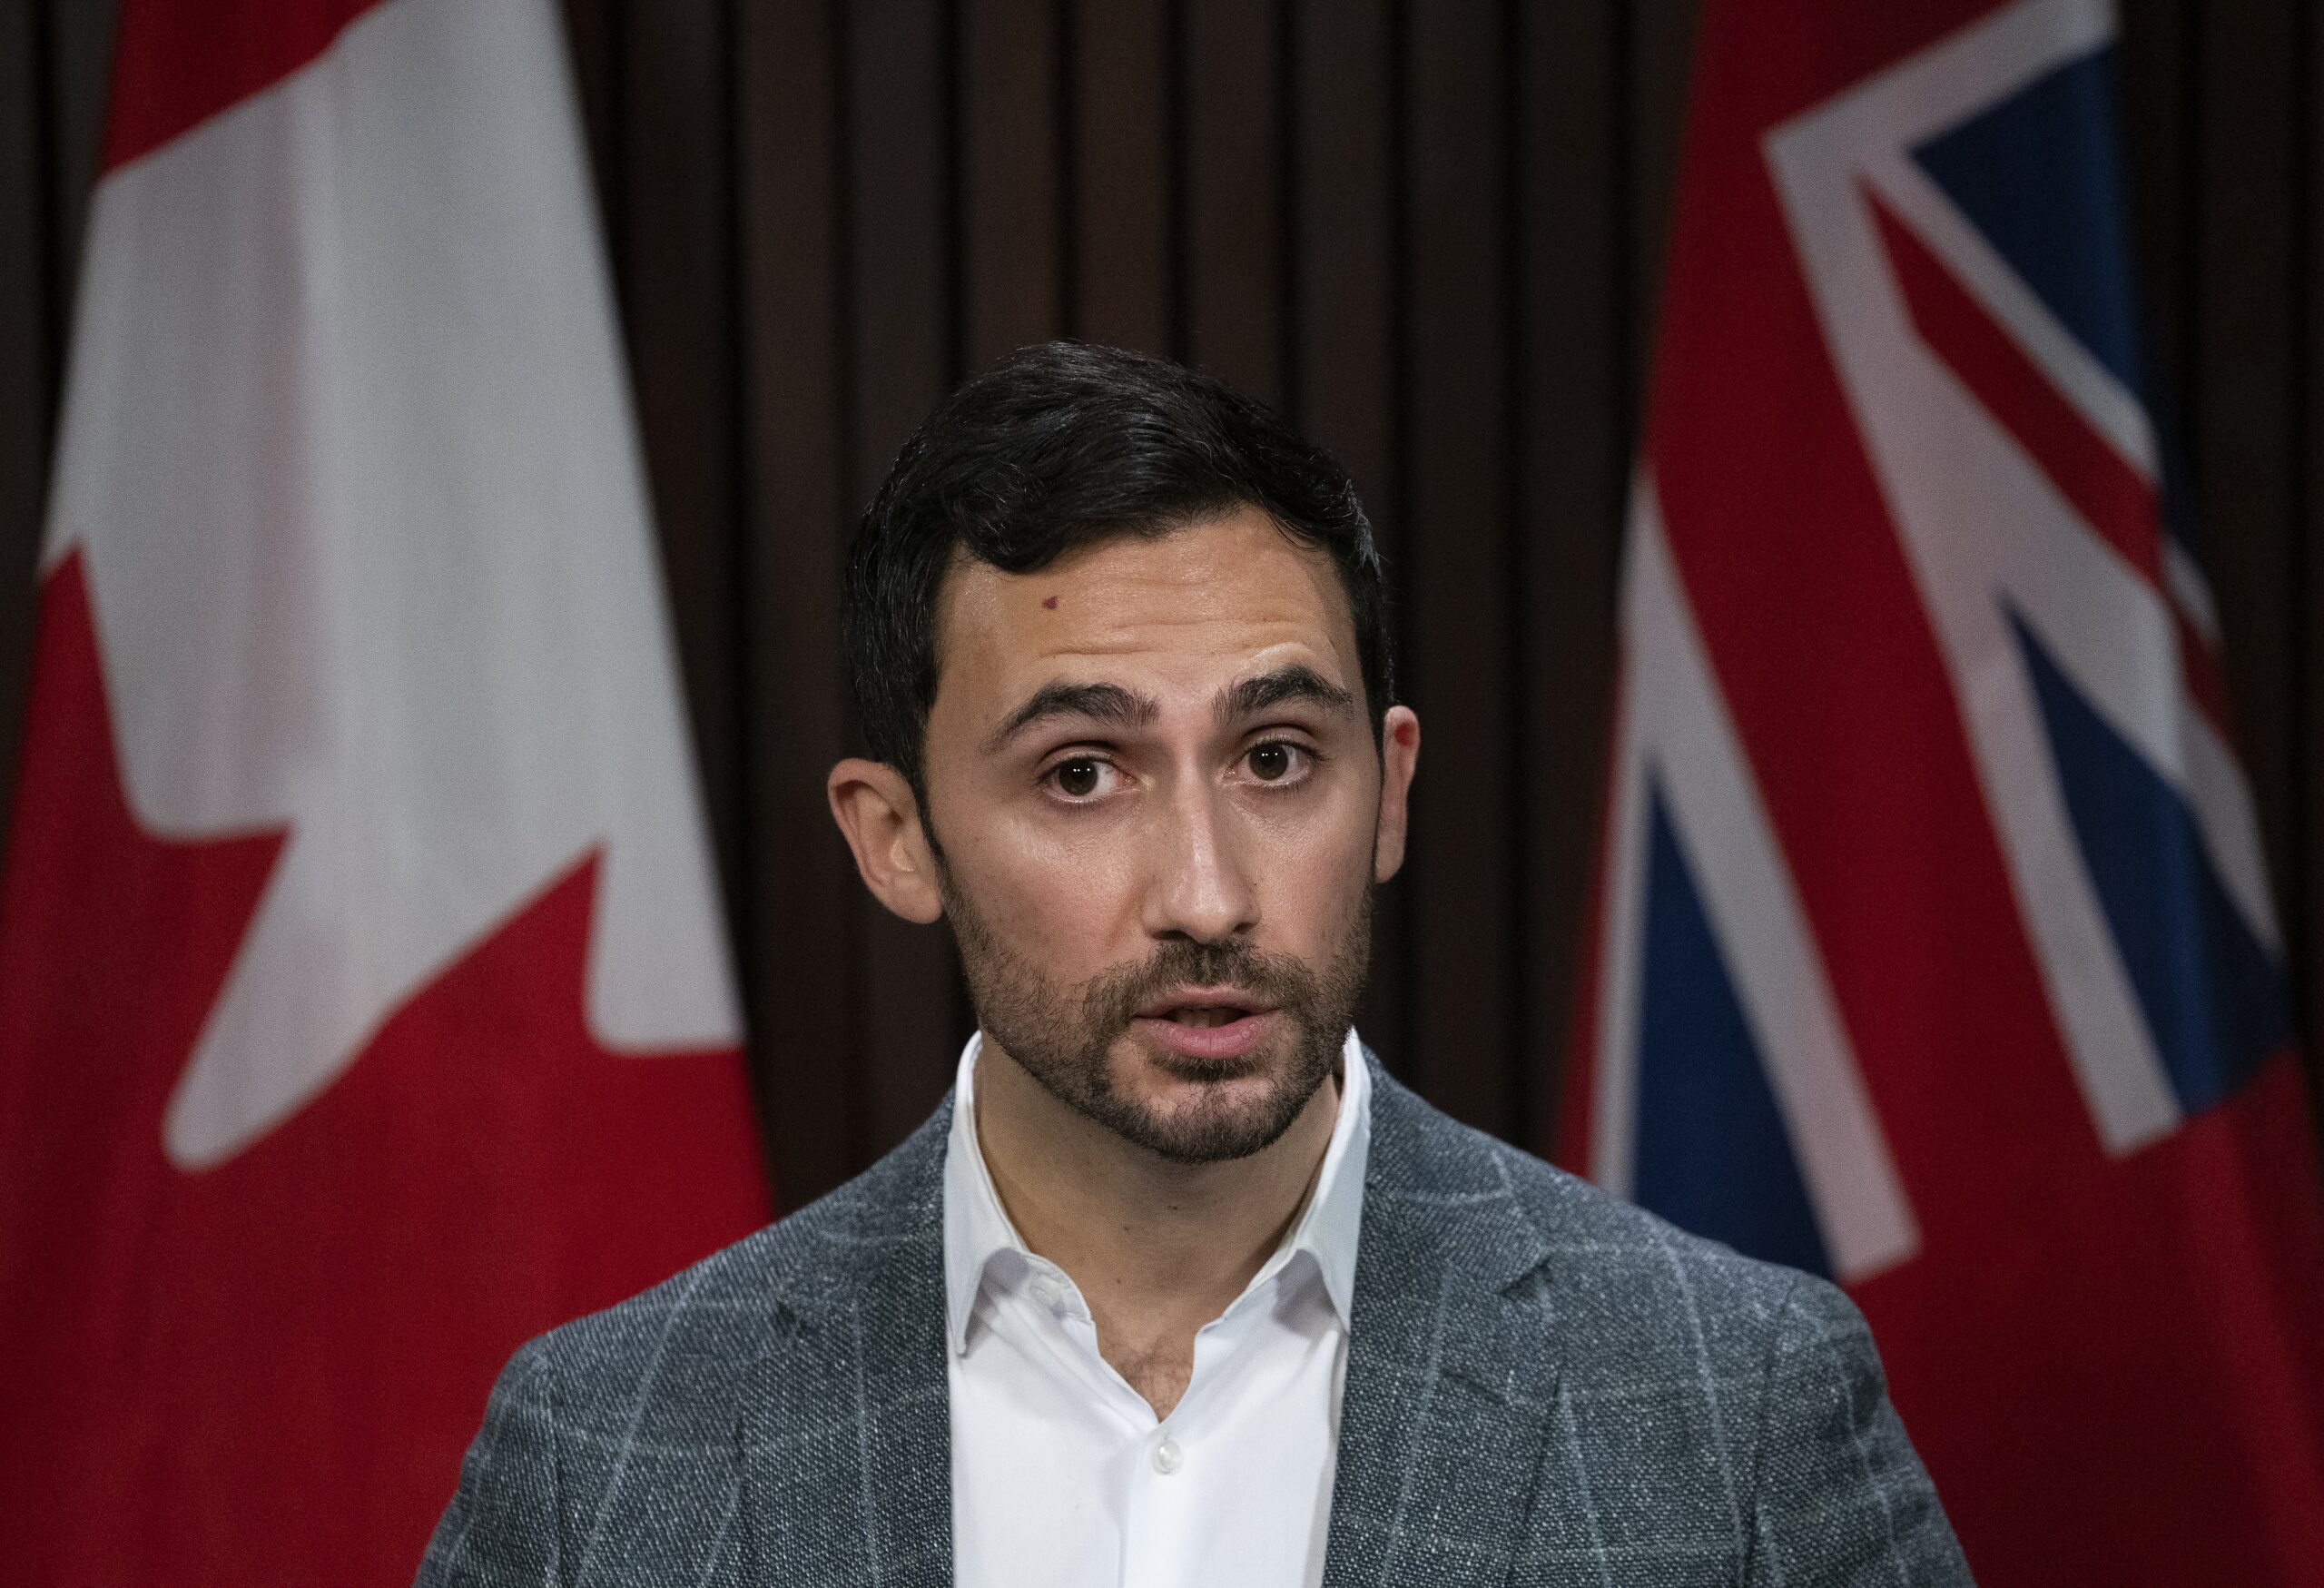 Contract talks break down between Ontario education workers, government